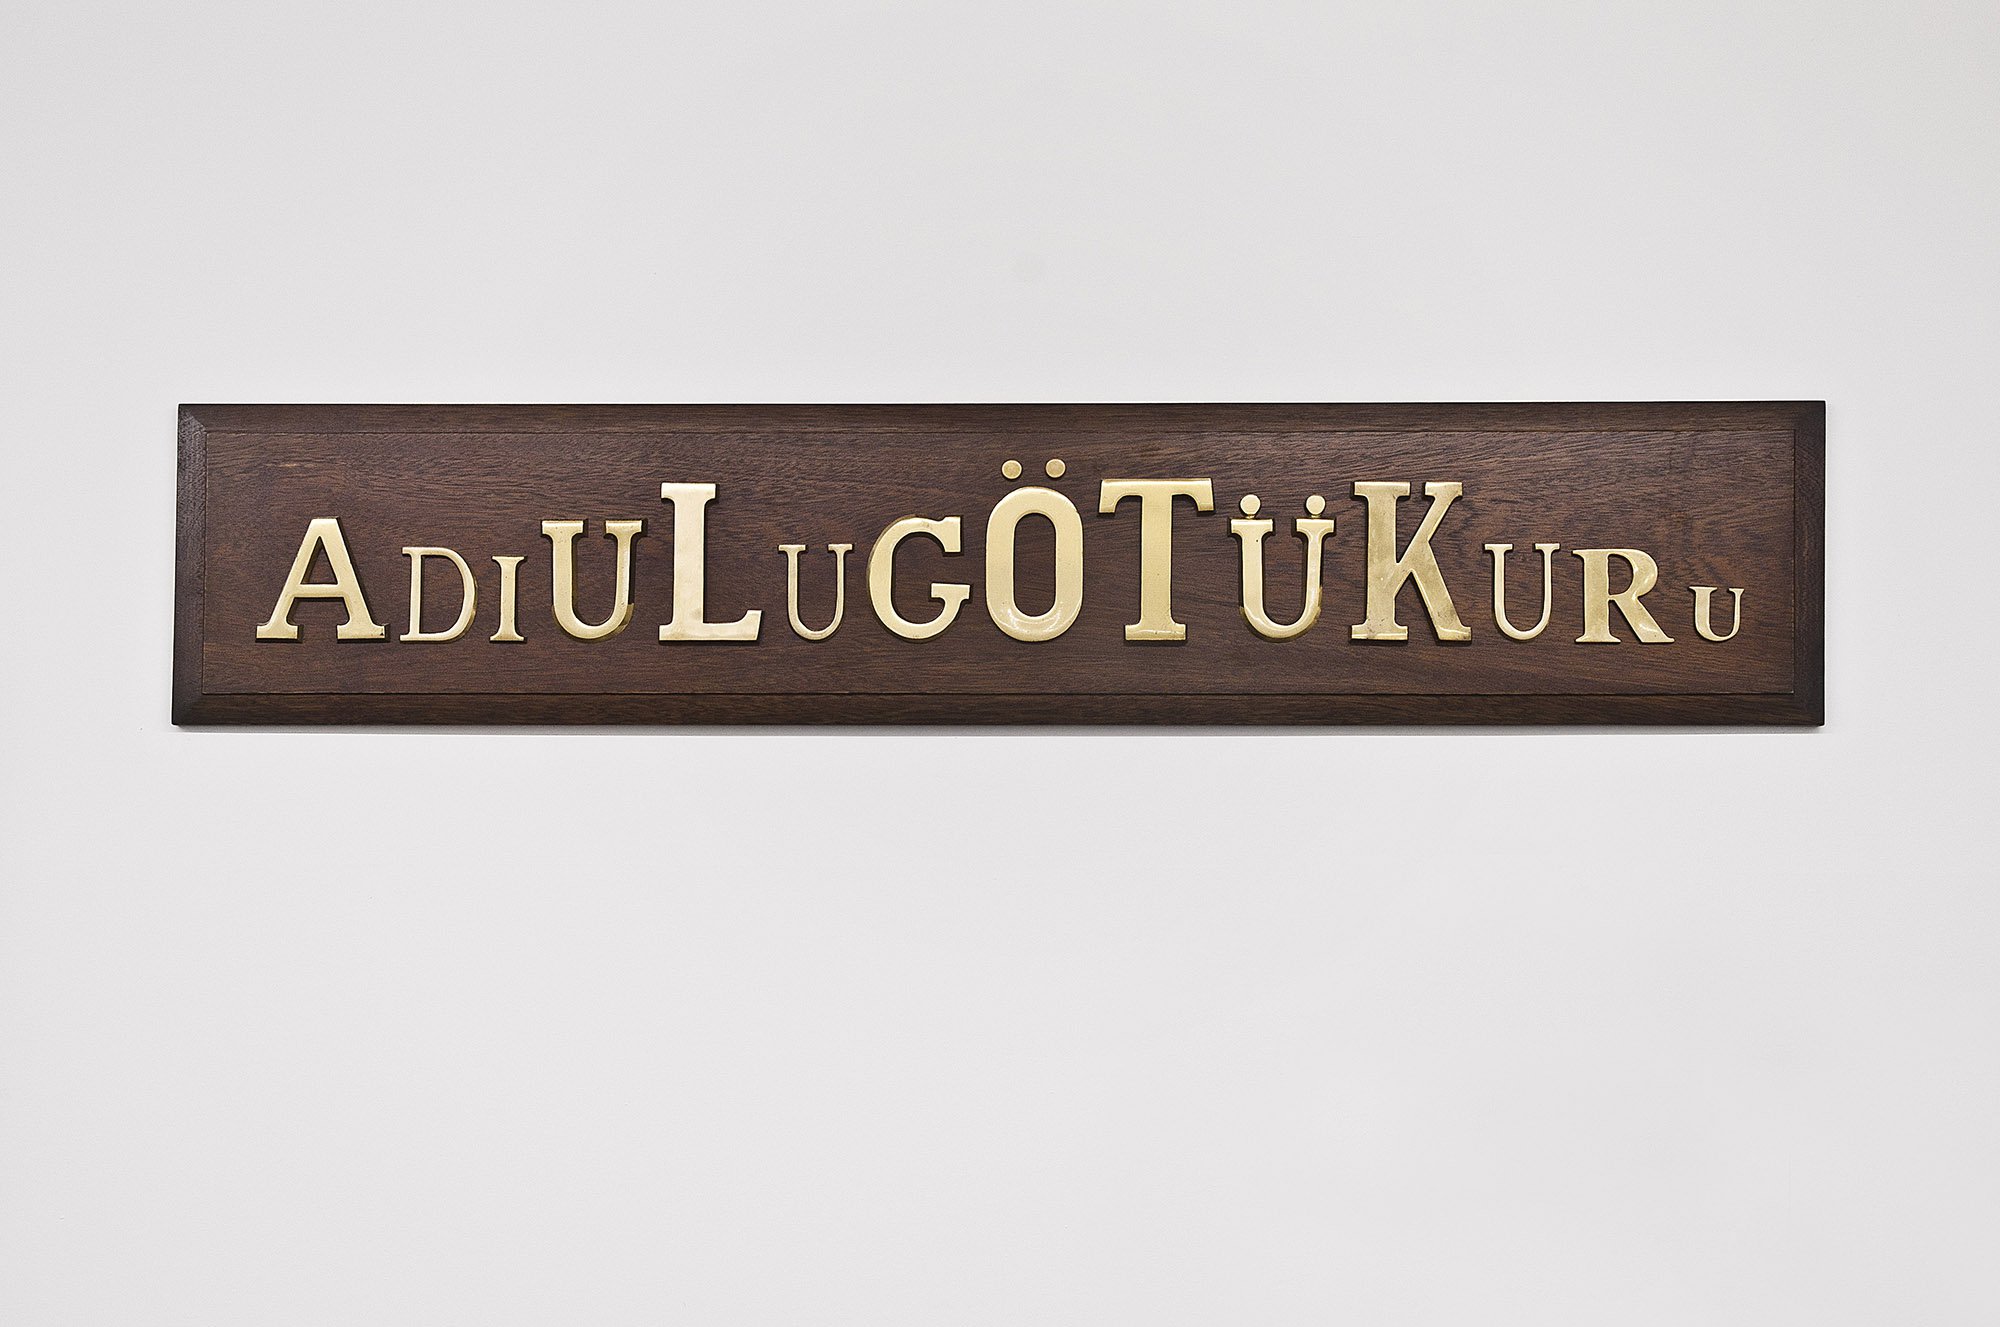 Banu Cennetoğlu, Adı Ulu Götü Kuru (great name dry ass), bronze letters on wood, 150 x 30 cm, 2010. Installation view, SAMPLE SALE / 2010 BC, Rodeo, Istanbul, 2010